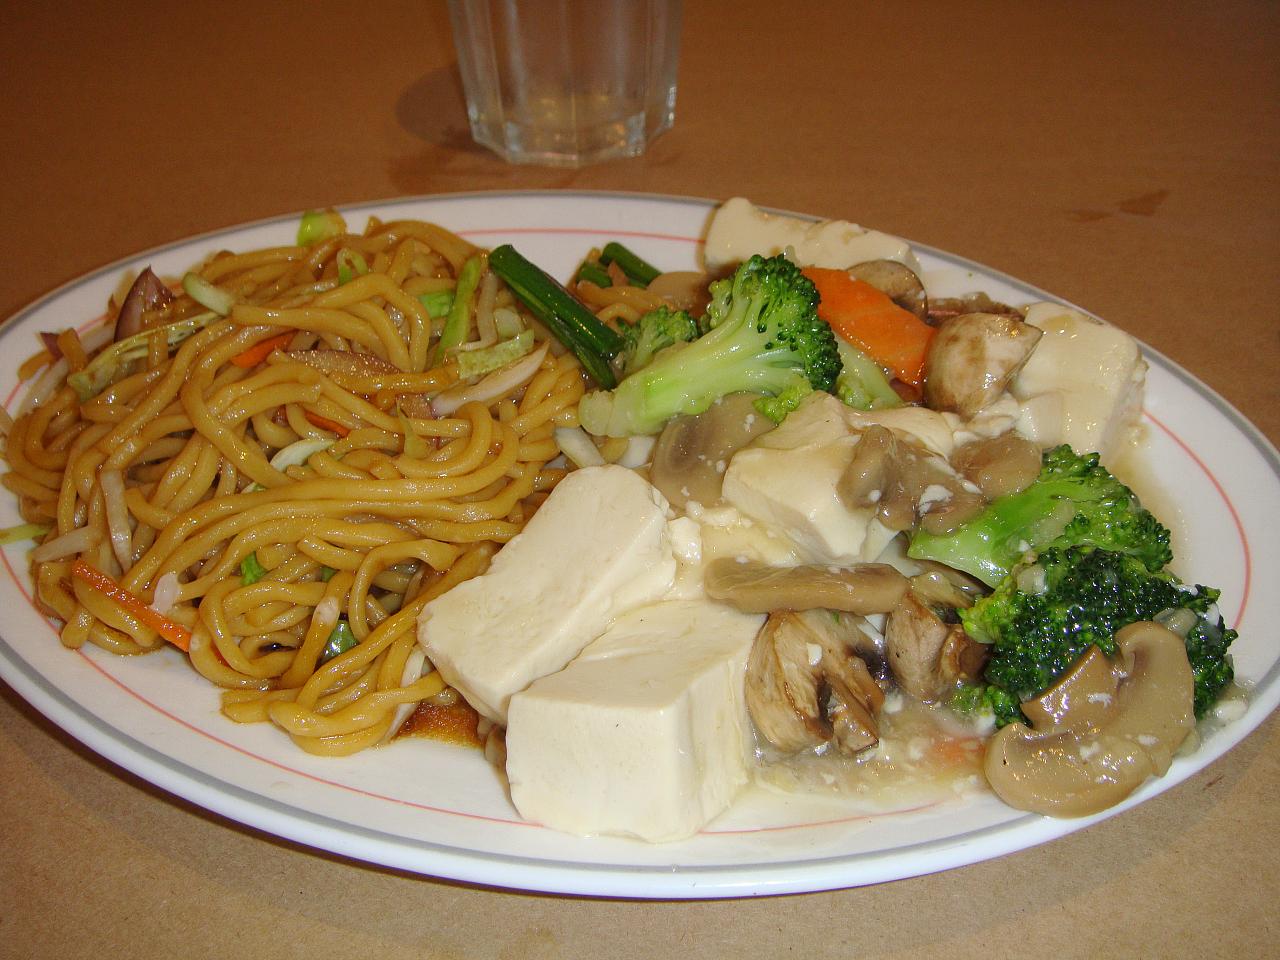 Tofu and Broccoli with Black Mushrooms